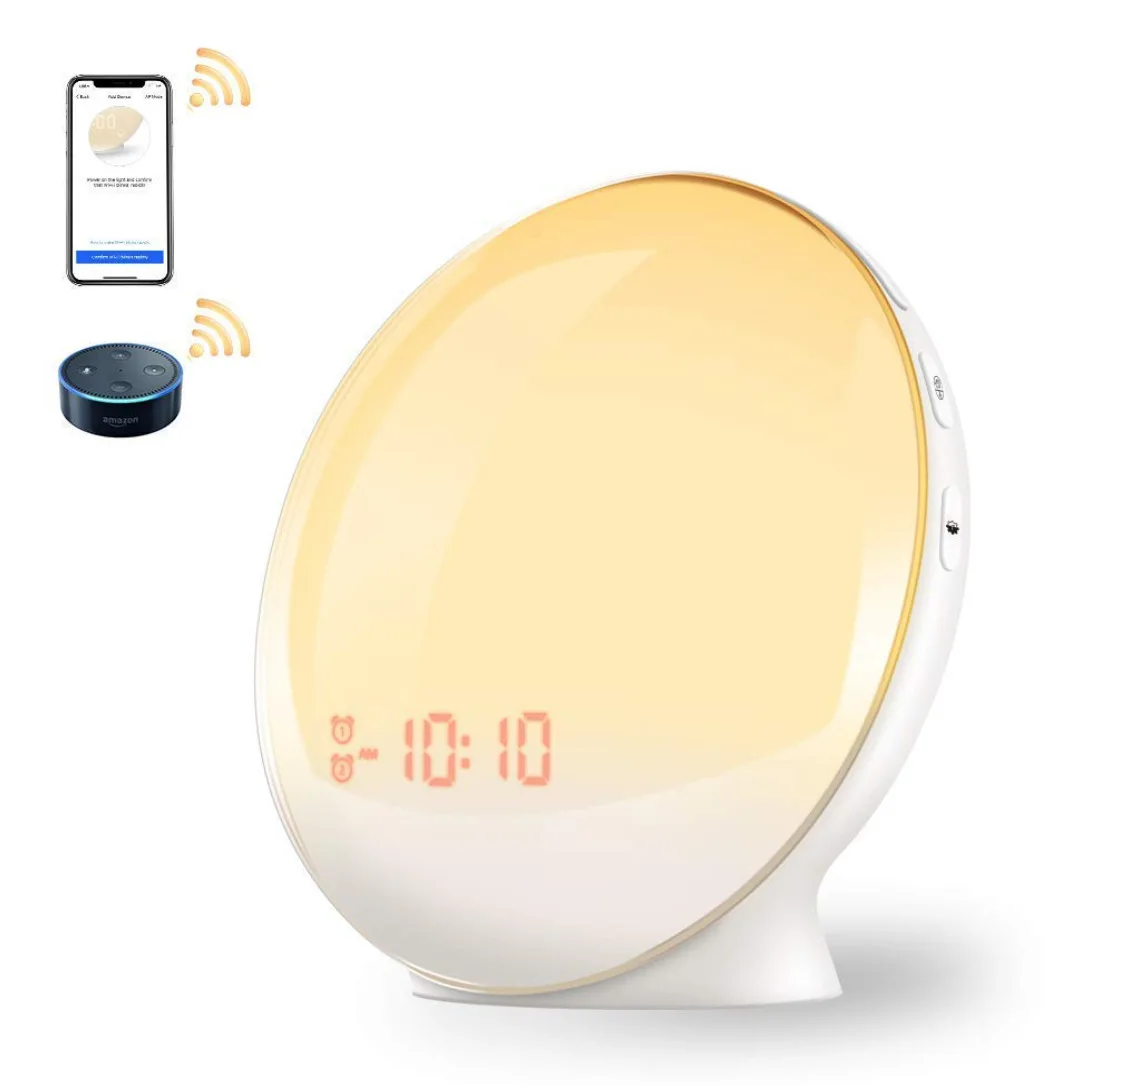 

WiFi intelligent Alarm Wake Up Digital Snooze Night Lamp Clock Sunrise Colorful Light With Nature Sounds FM Radios